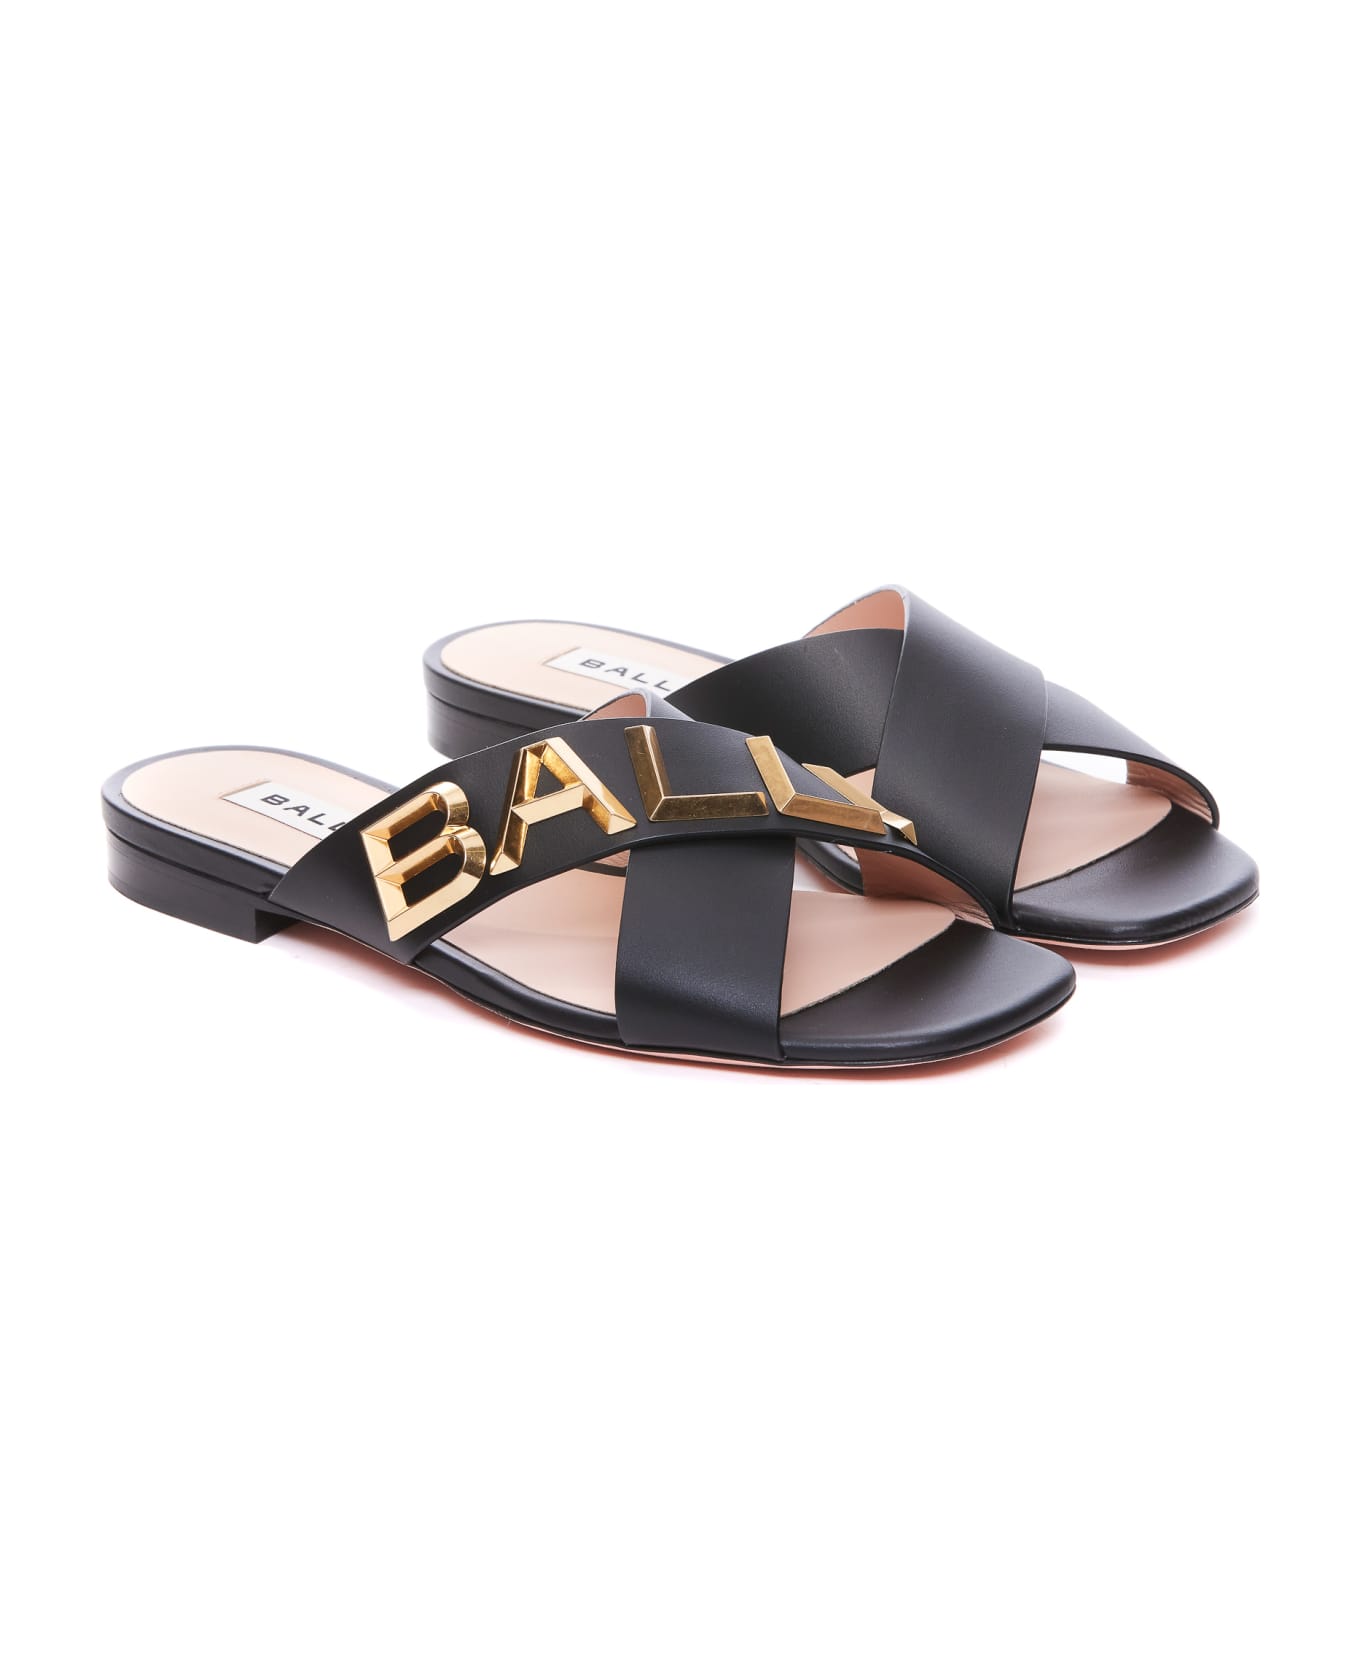 Bally Larise Flat Sandals - Black